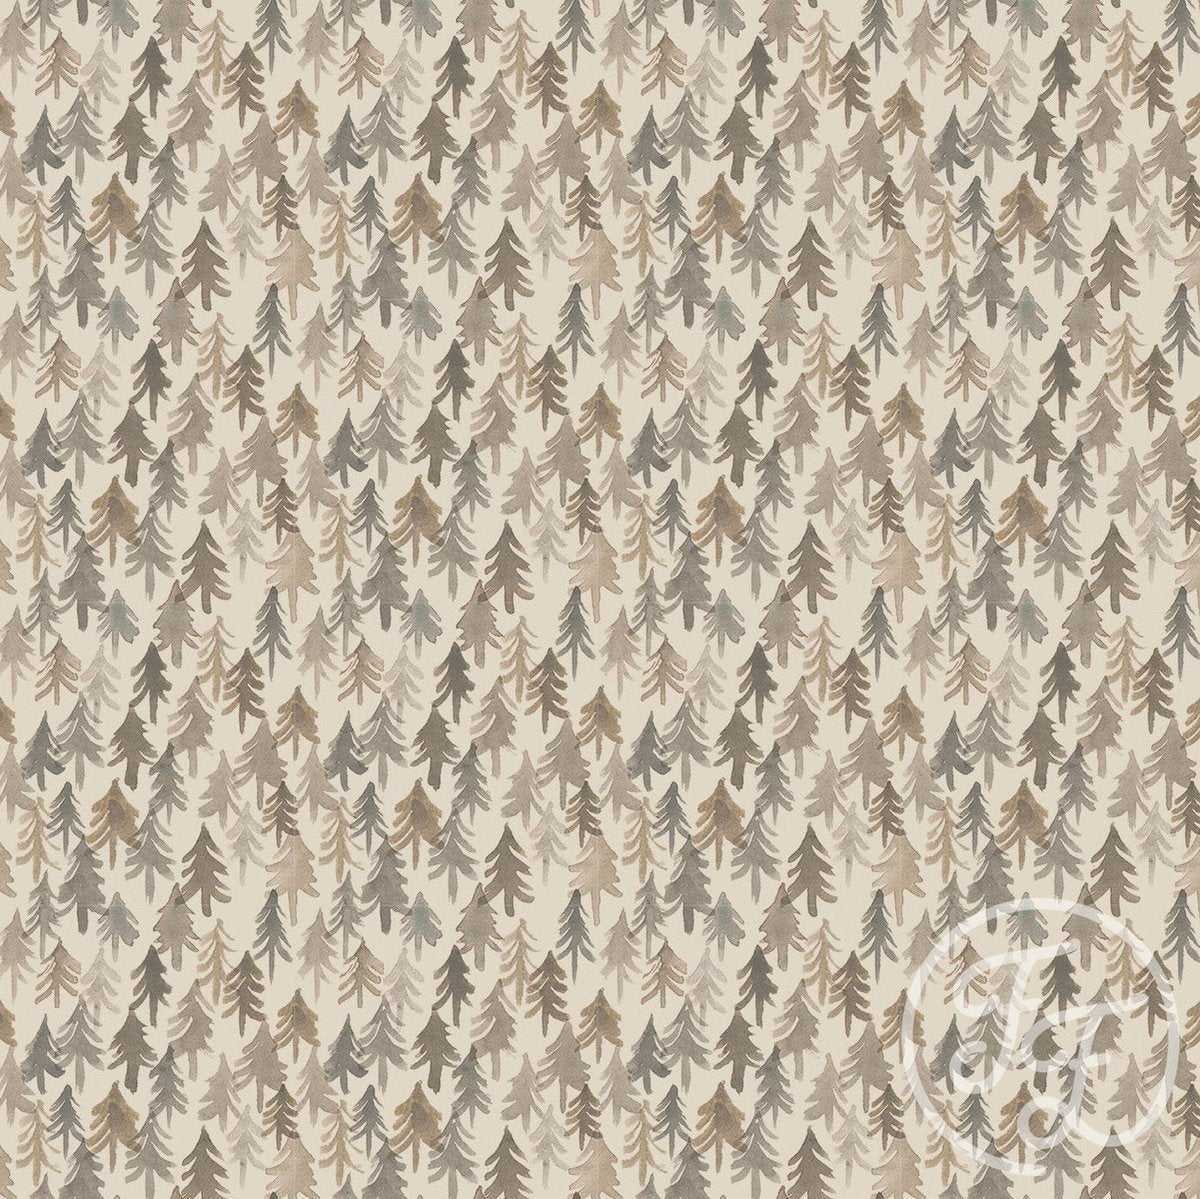 Woods - Cotton Jersey Knit